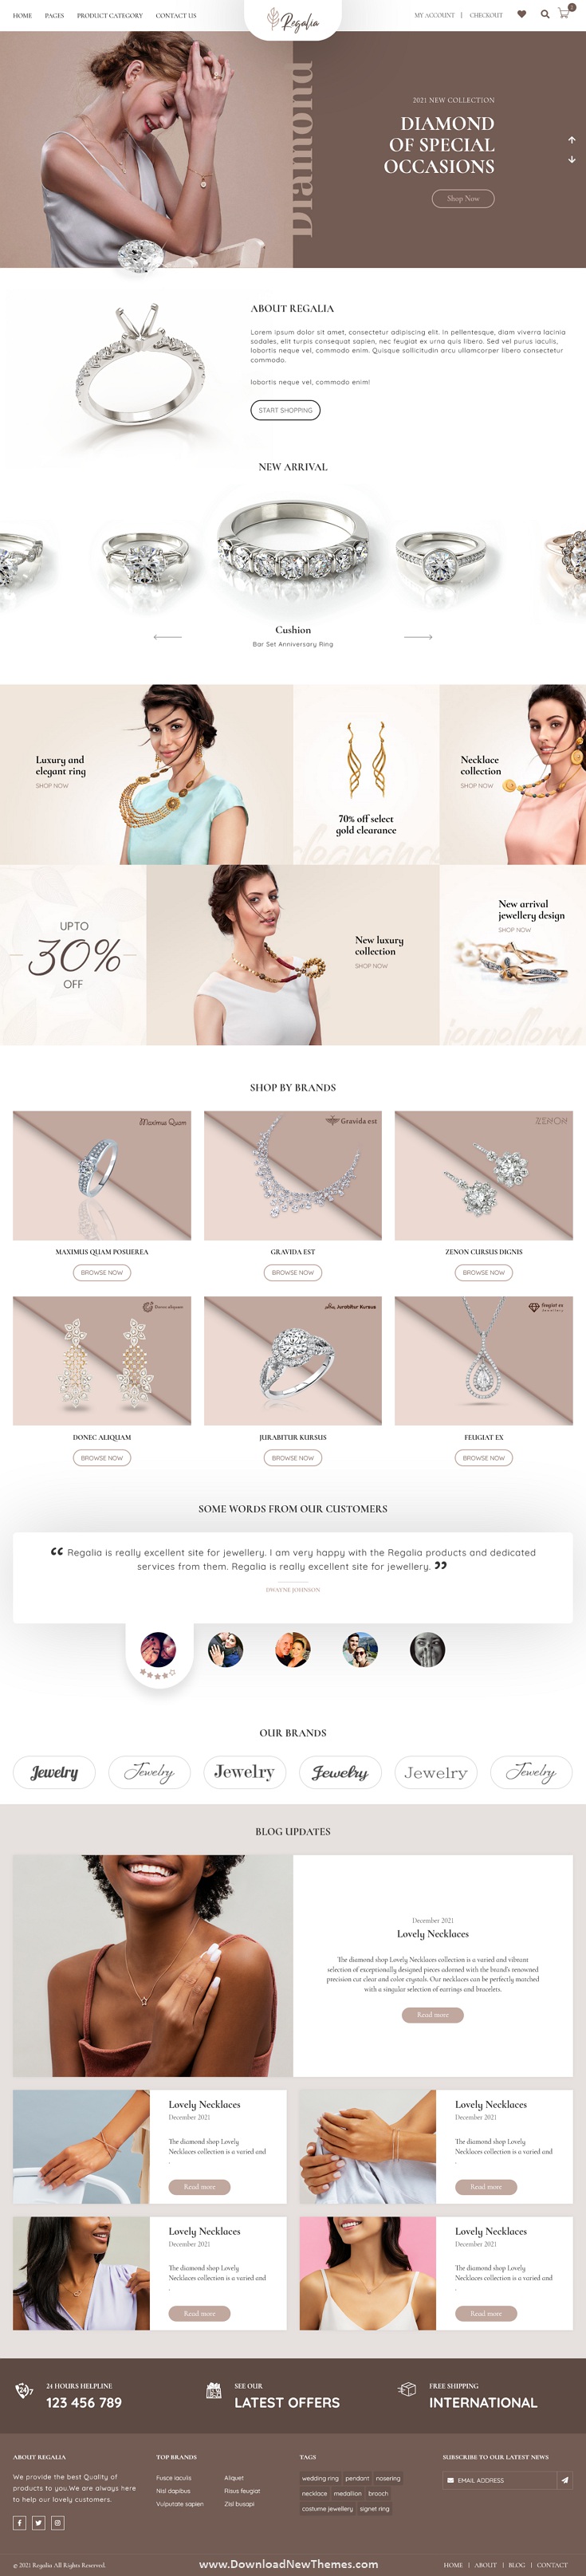 Regalia a Complete Jewelry Shop HTML Template